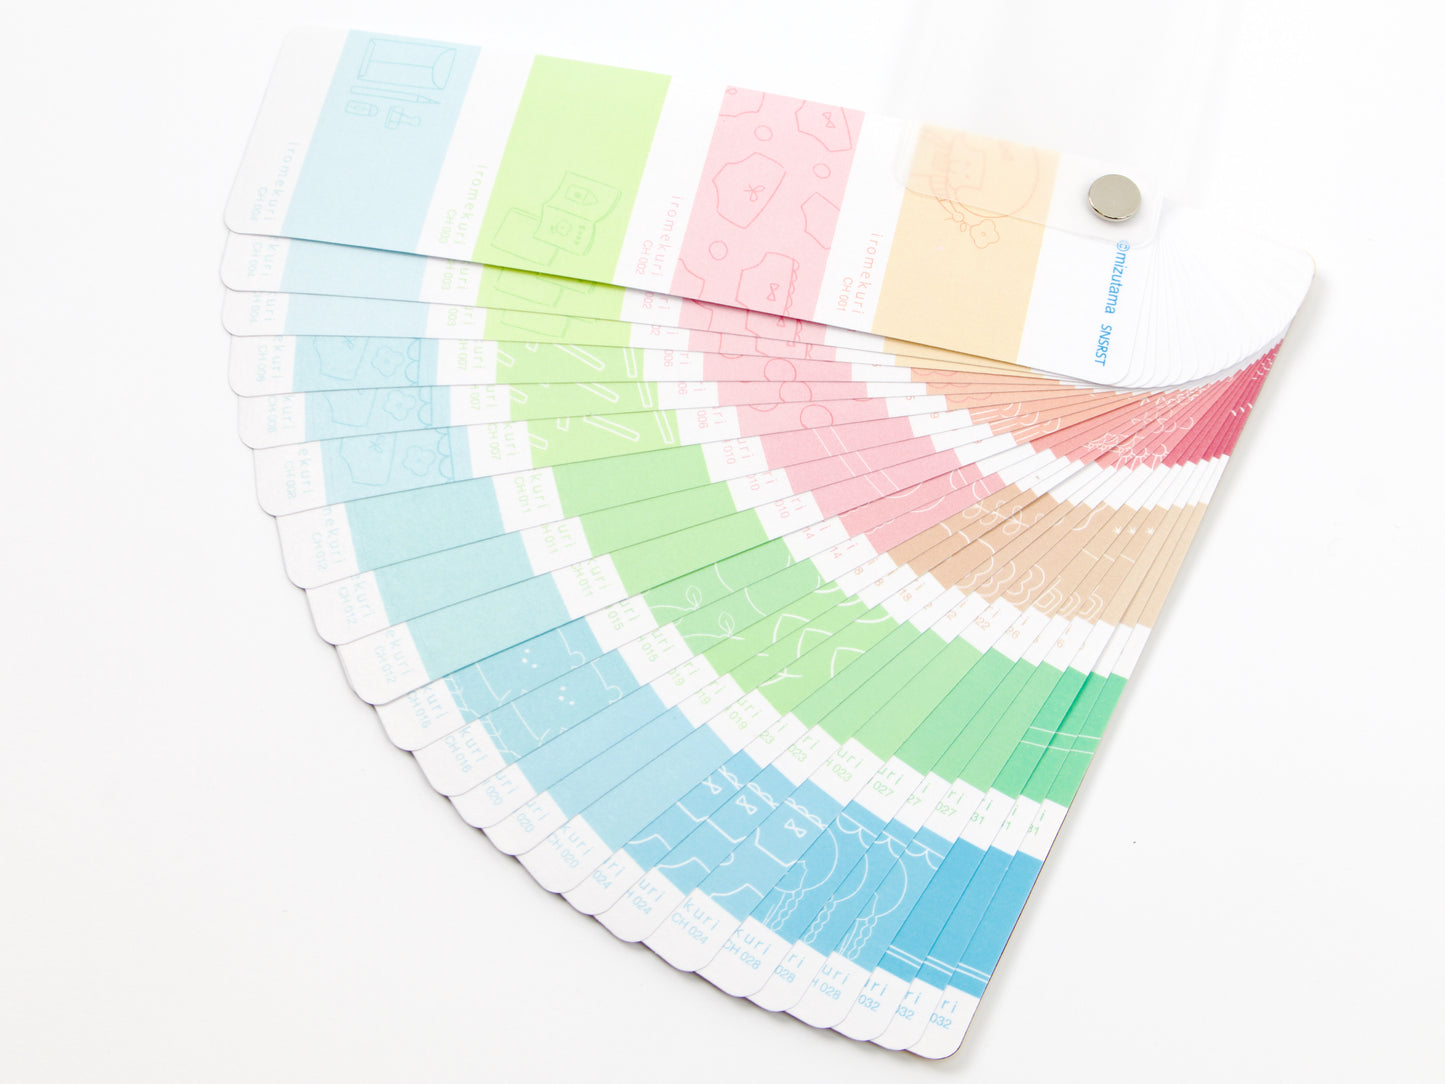 Iromekuri X Mizutama Color Book Stickers